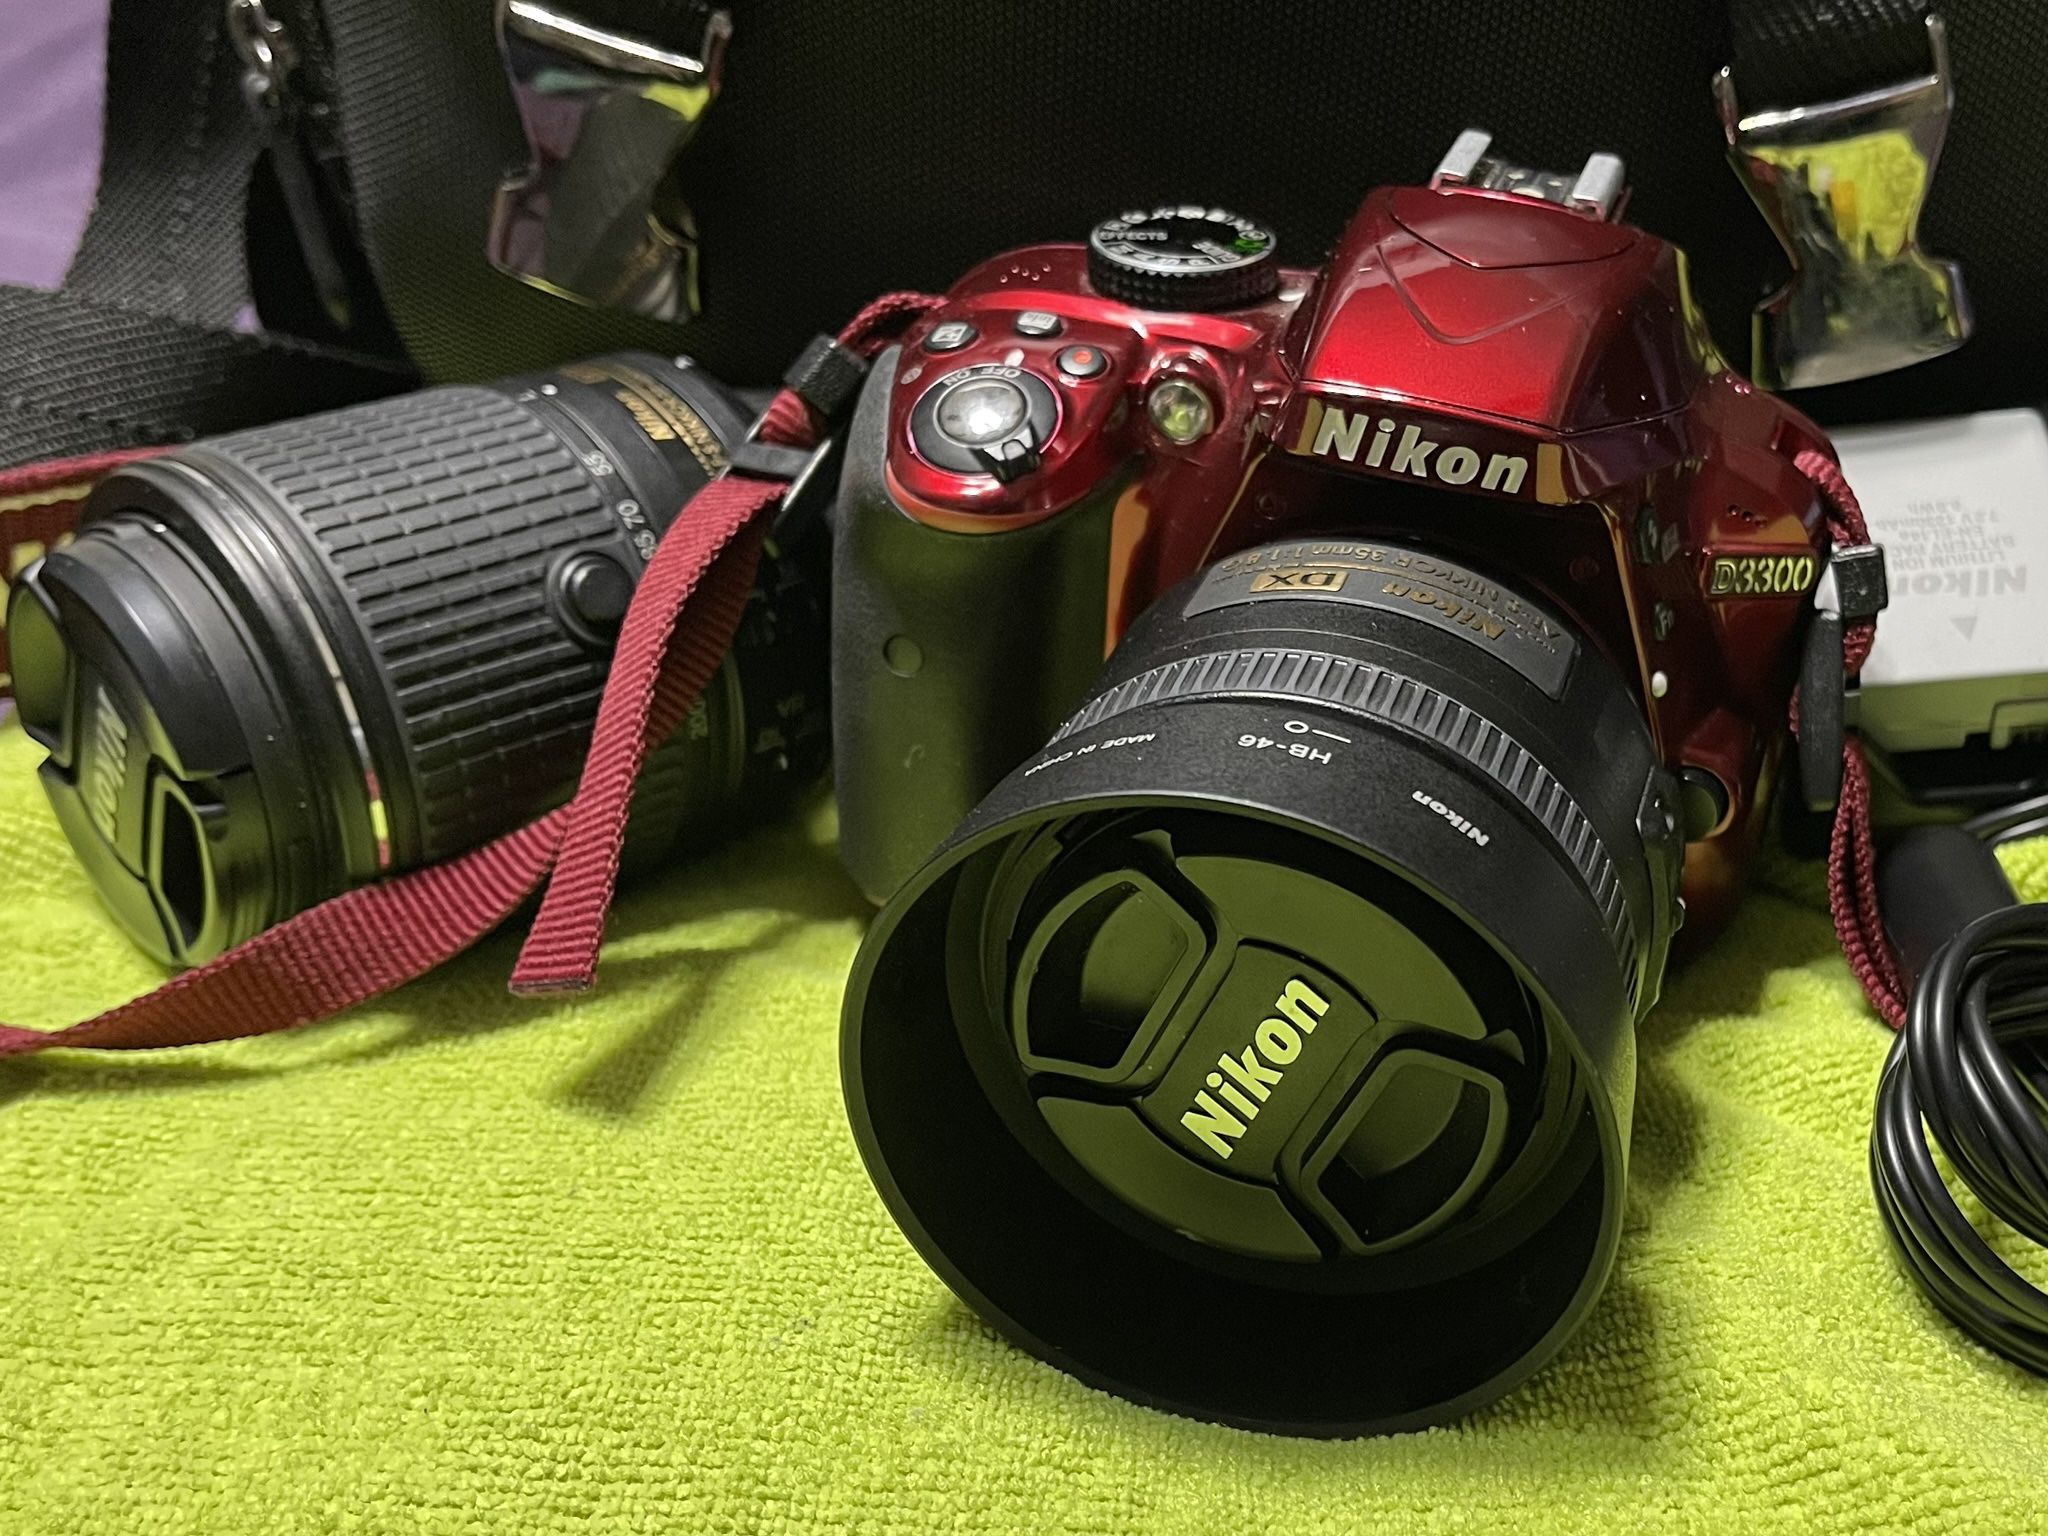 Nikon D3300 24.2 MP CMOS Digital SLR with Auto Focus-S DX and The AF-S DX NIKKOR 35mm f/1.8G & hood